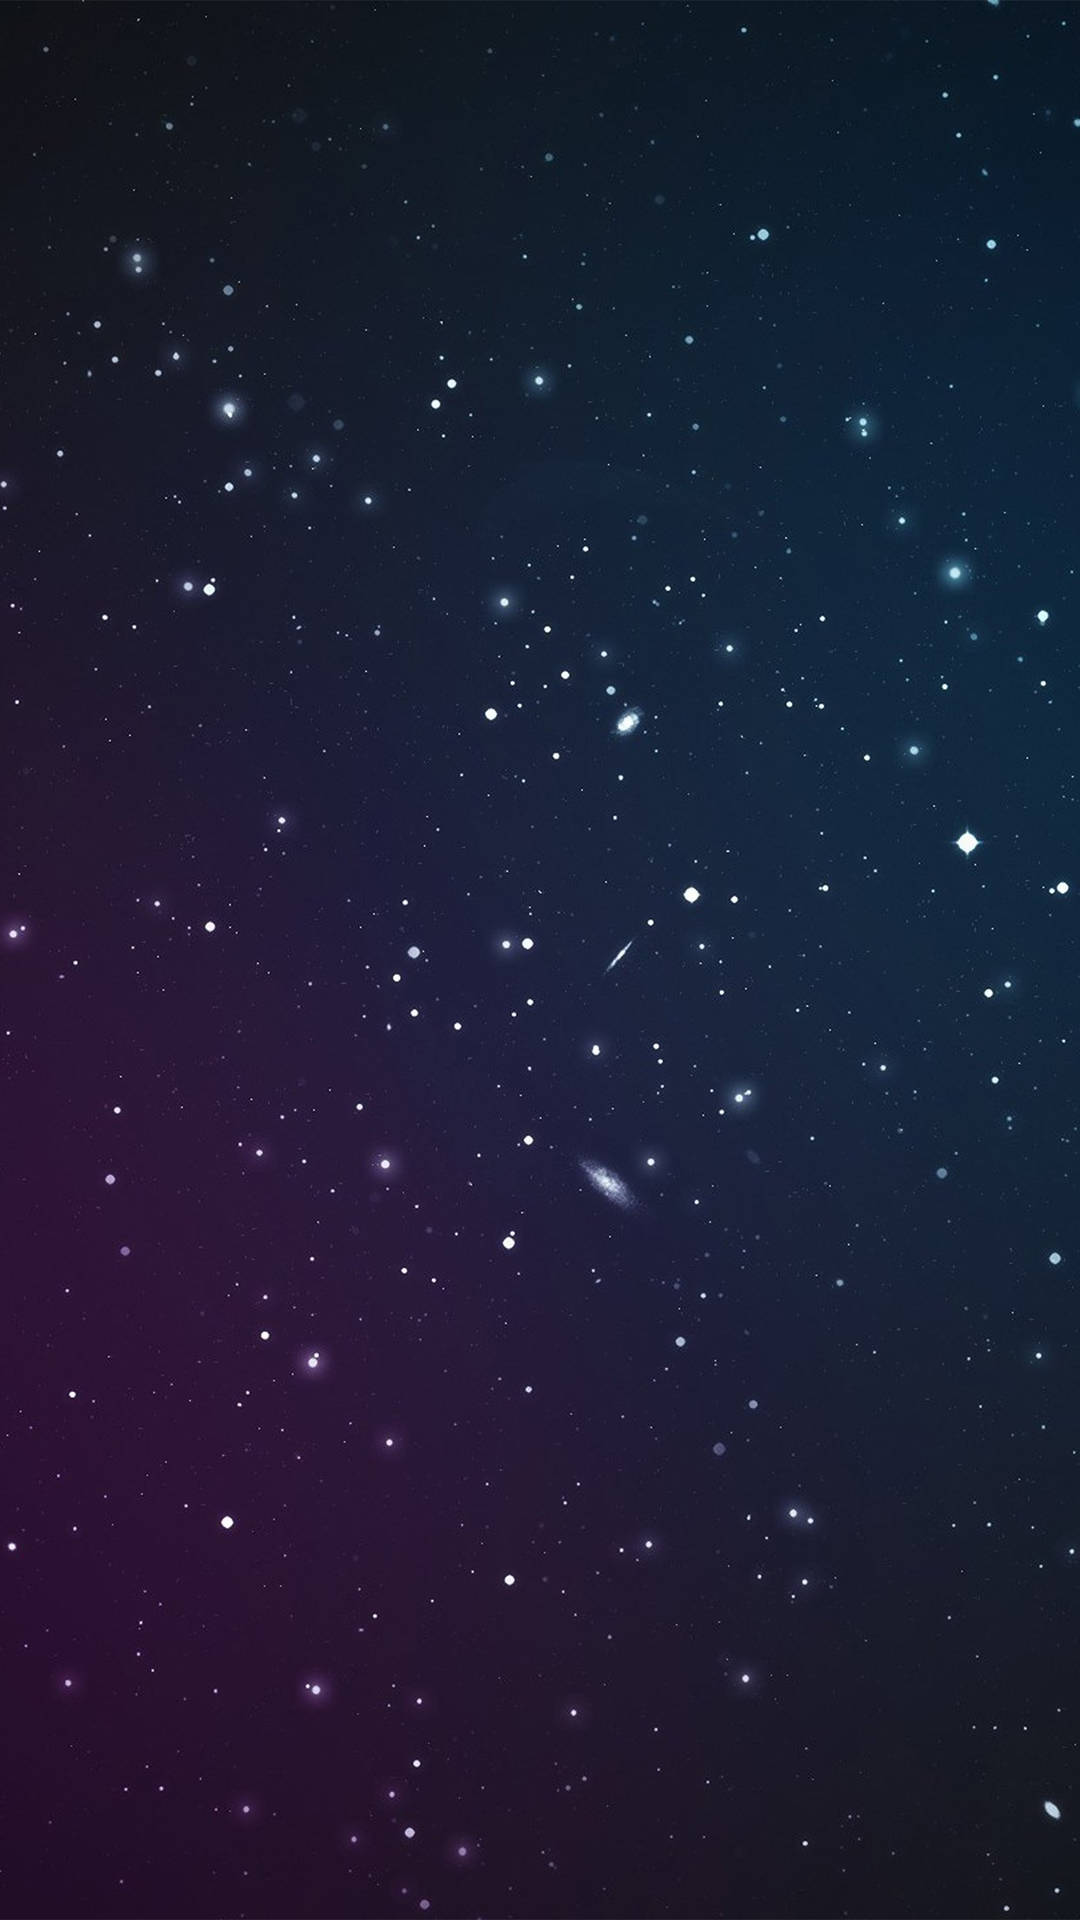 Starry Night Sky Smartphone Background Wallpaper